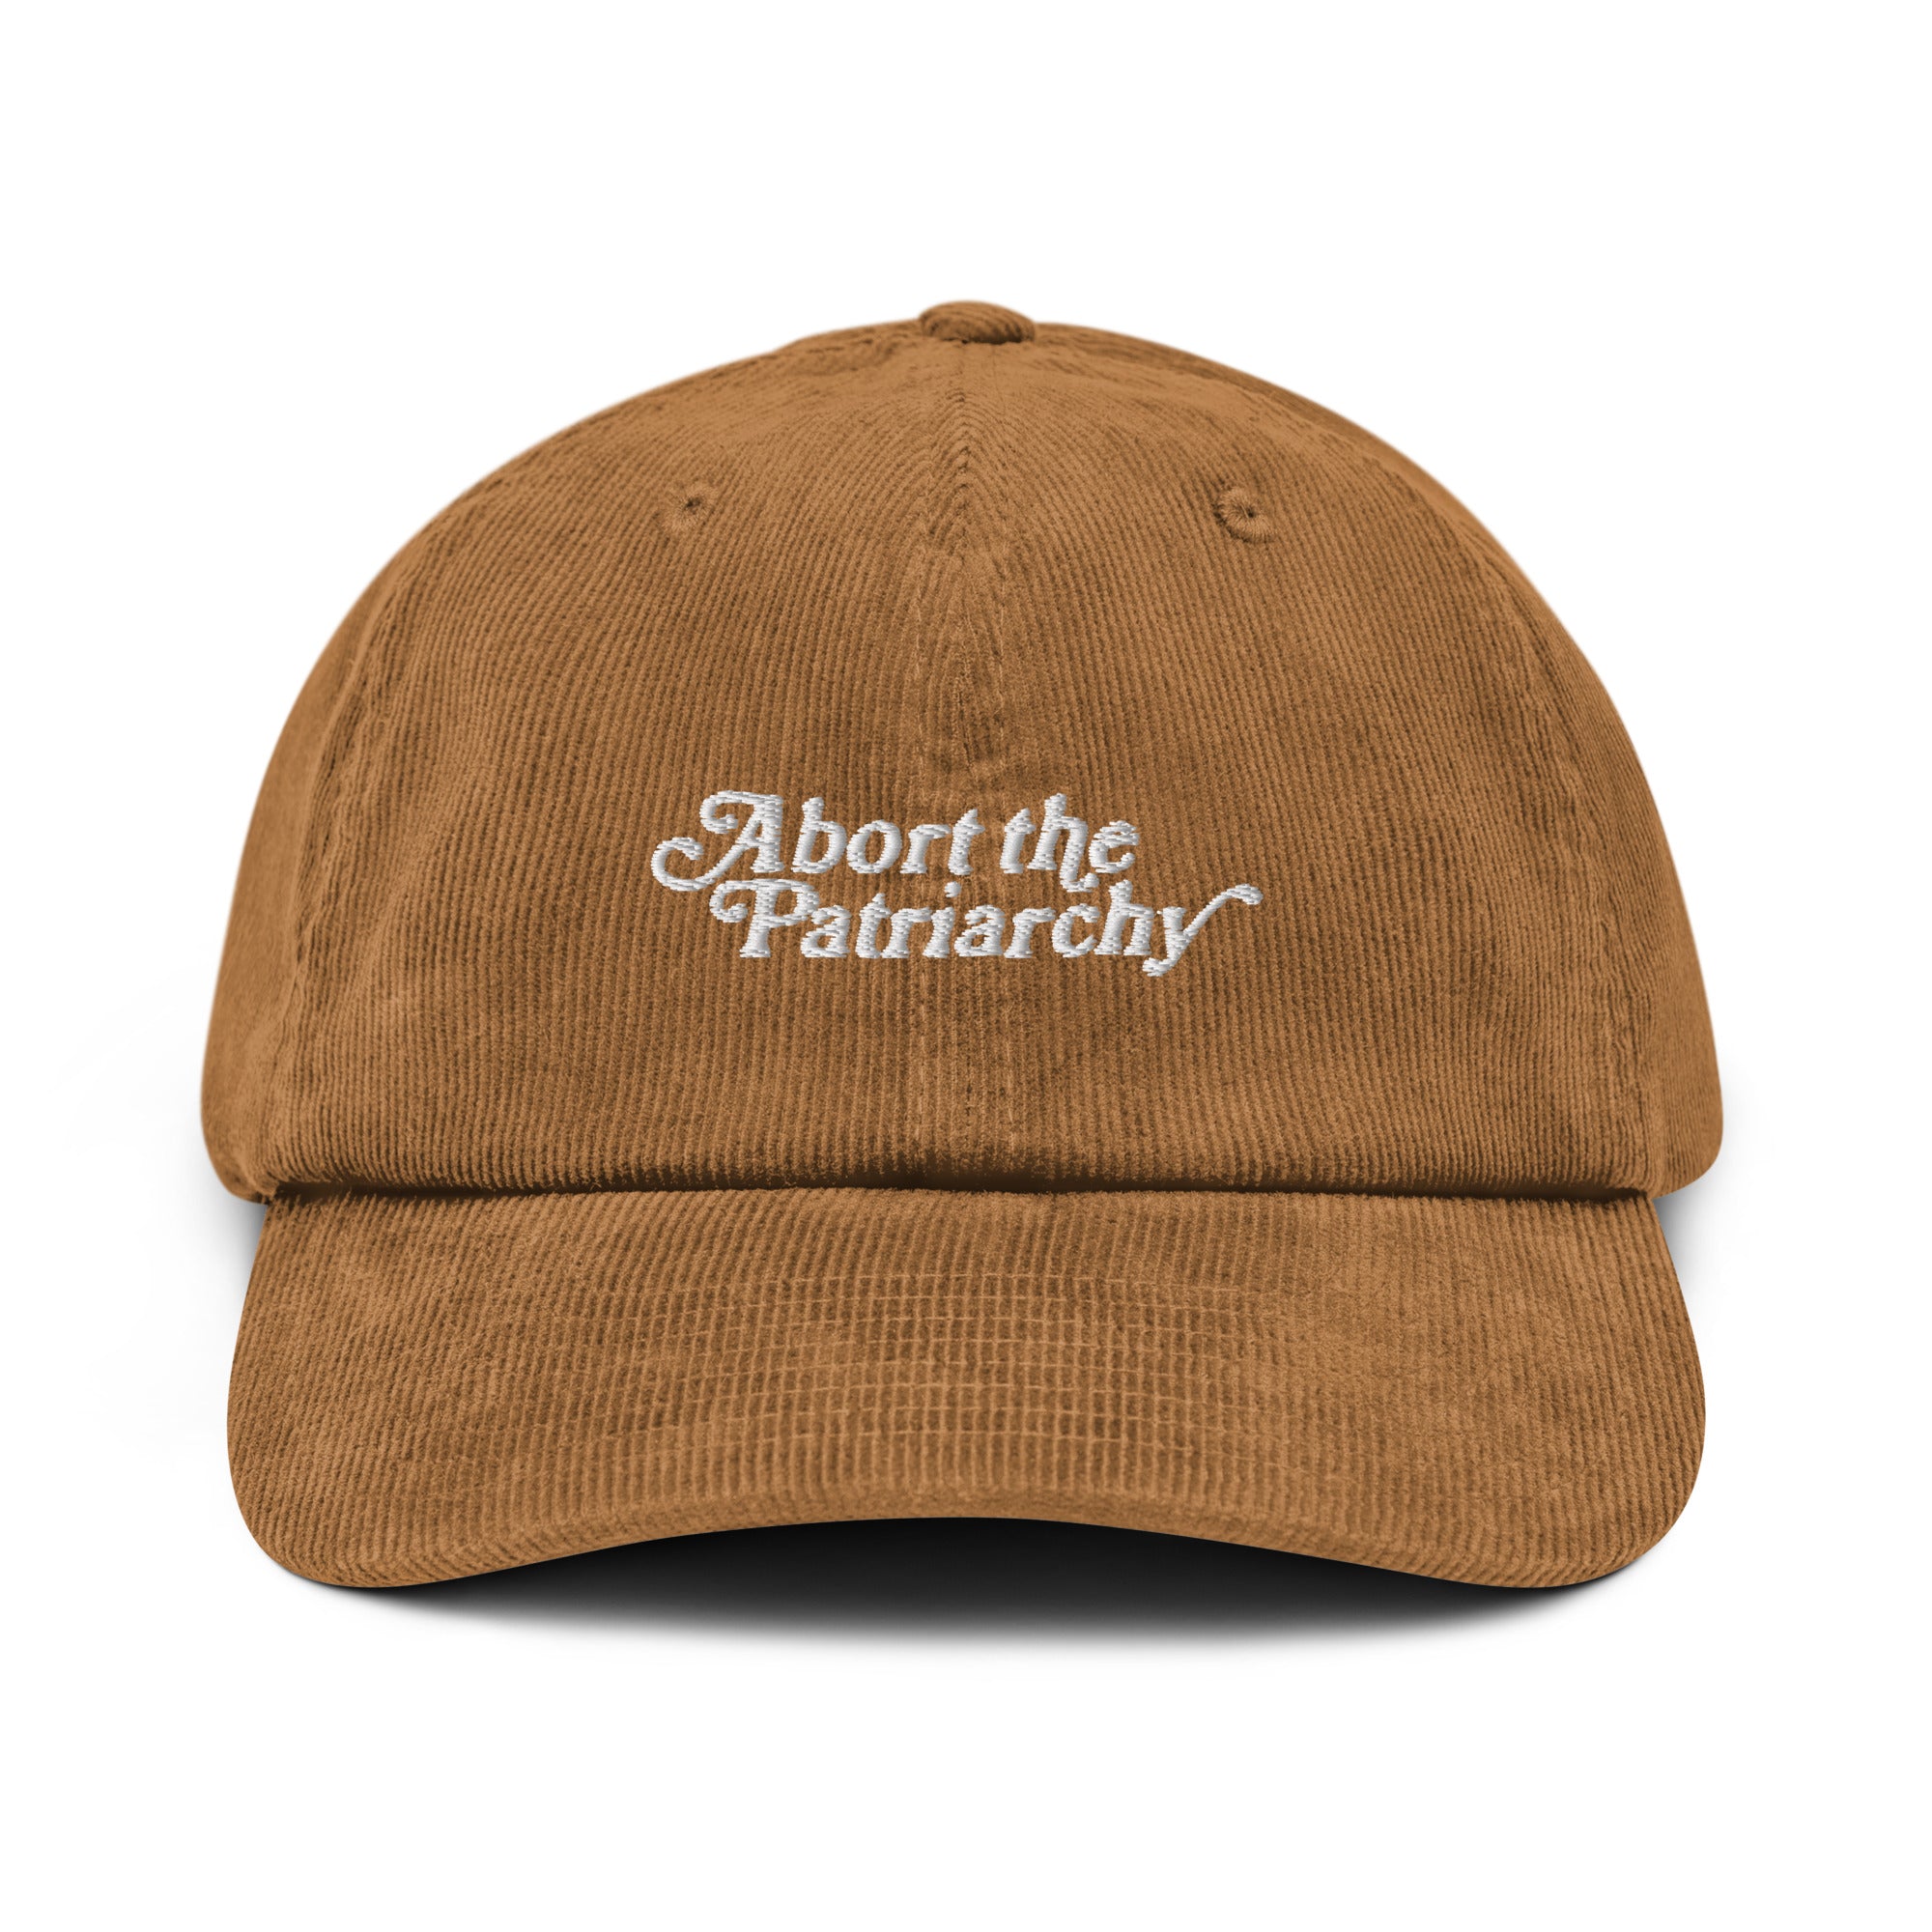 Abort the Patriarchy Corduroy Hat